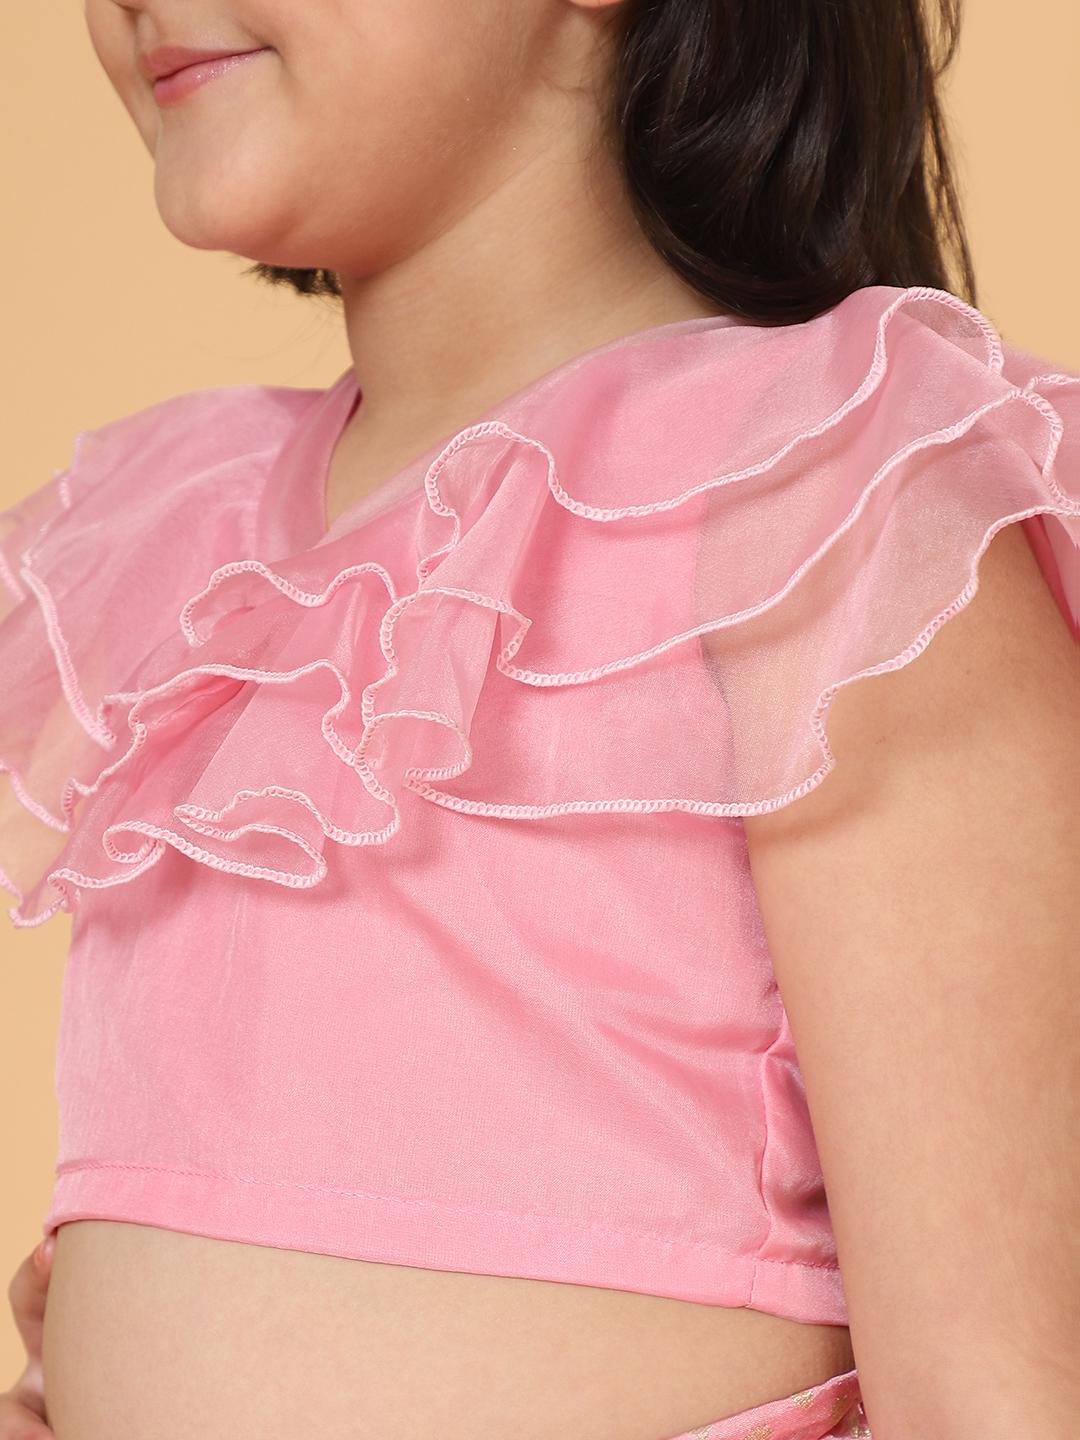 pink-organza-choli-with-lehenga-set-10509080PK, Kids Indian Ethnic Clothing, Silk Girl Lehenga Set